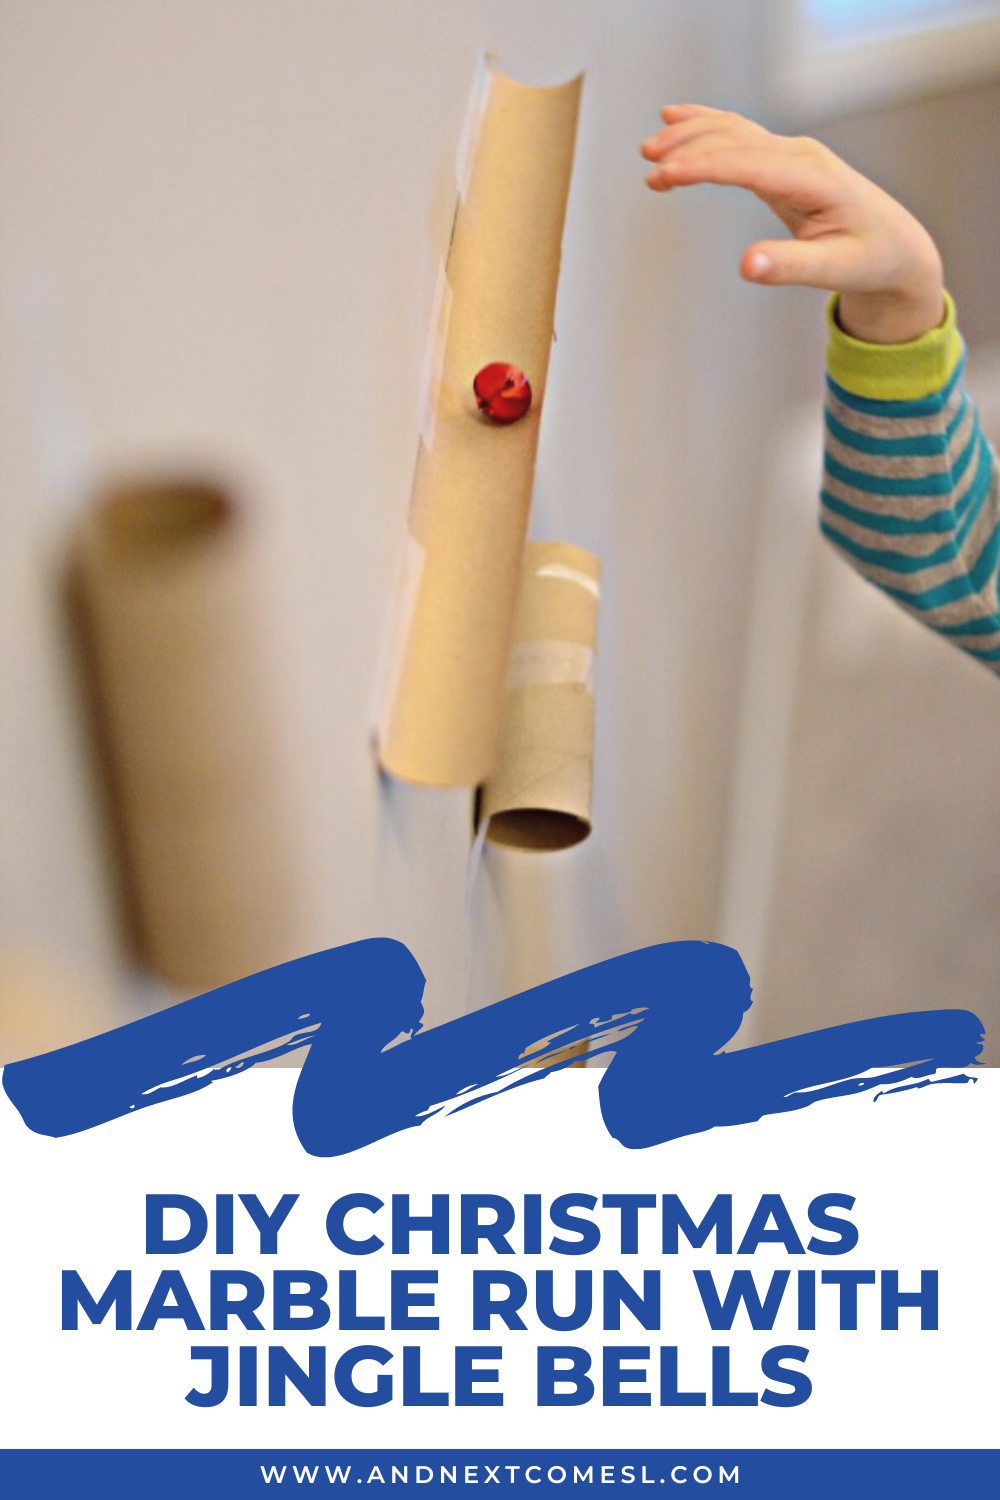 Make a DIY Christmas marble run for jingle bells as a fun Christmas boredom buster activity